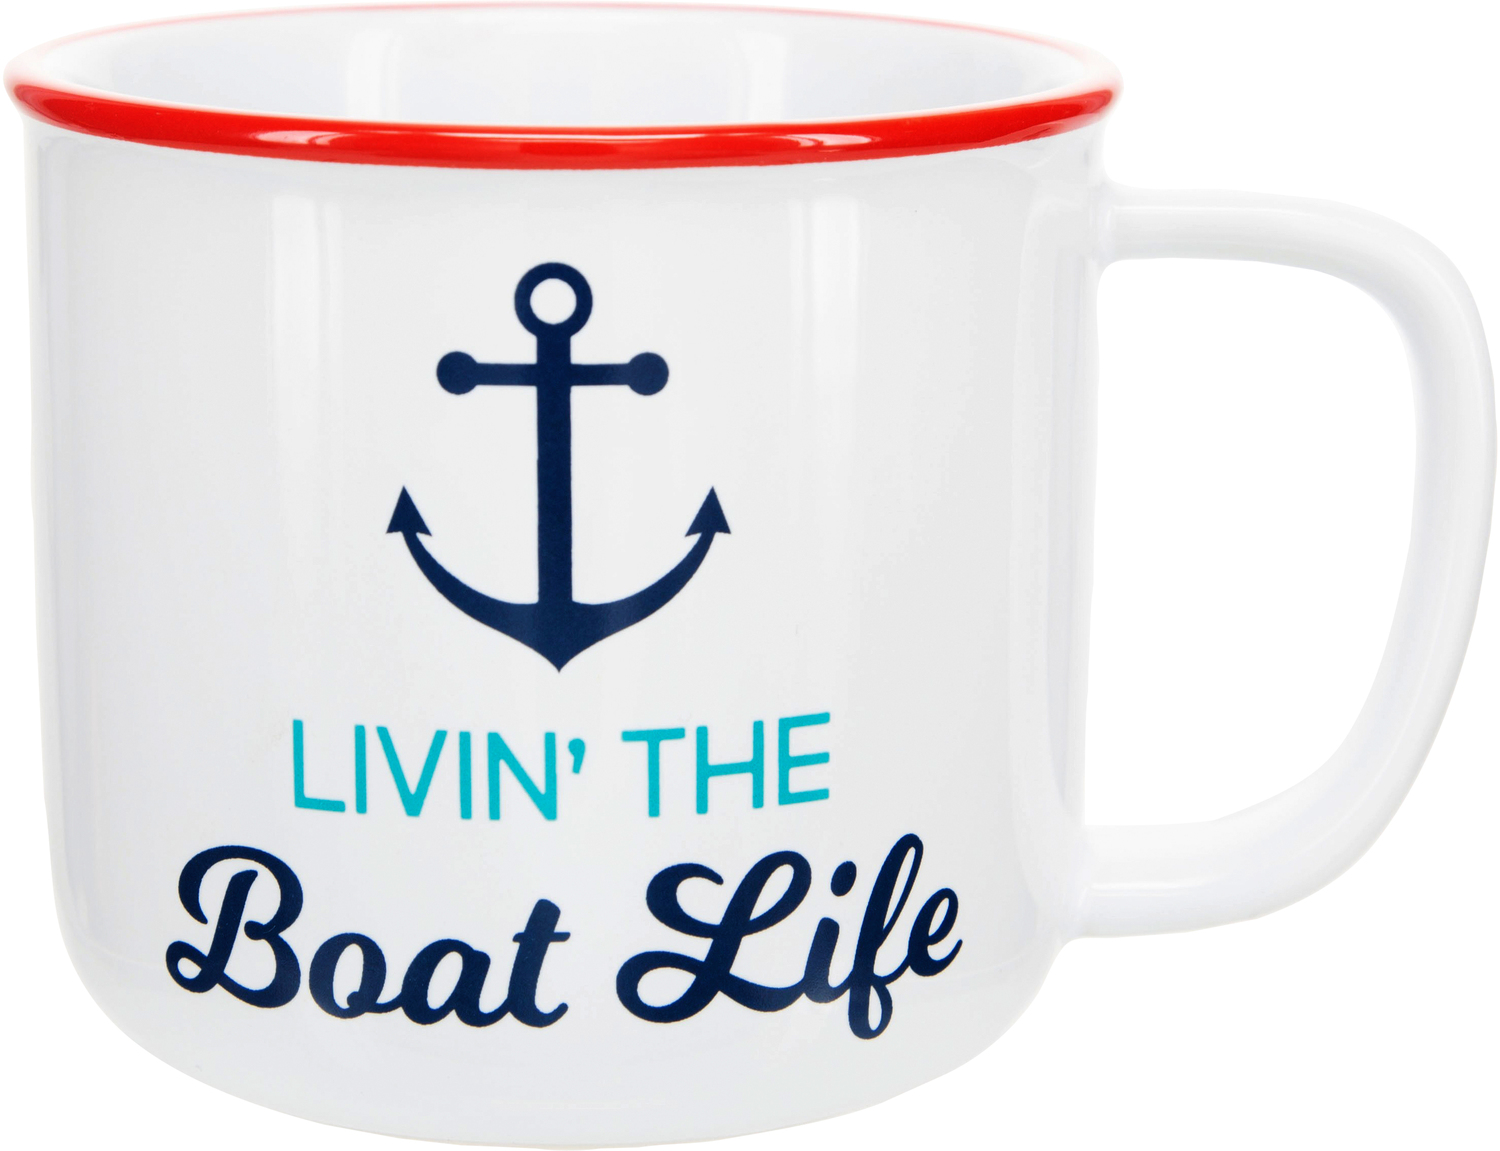 Boat Life by We People - Boat Life - 17 oz Mug